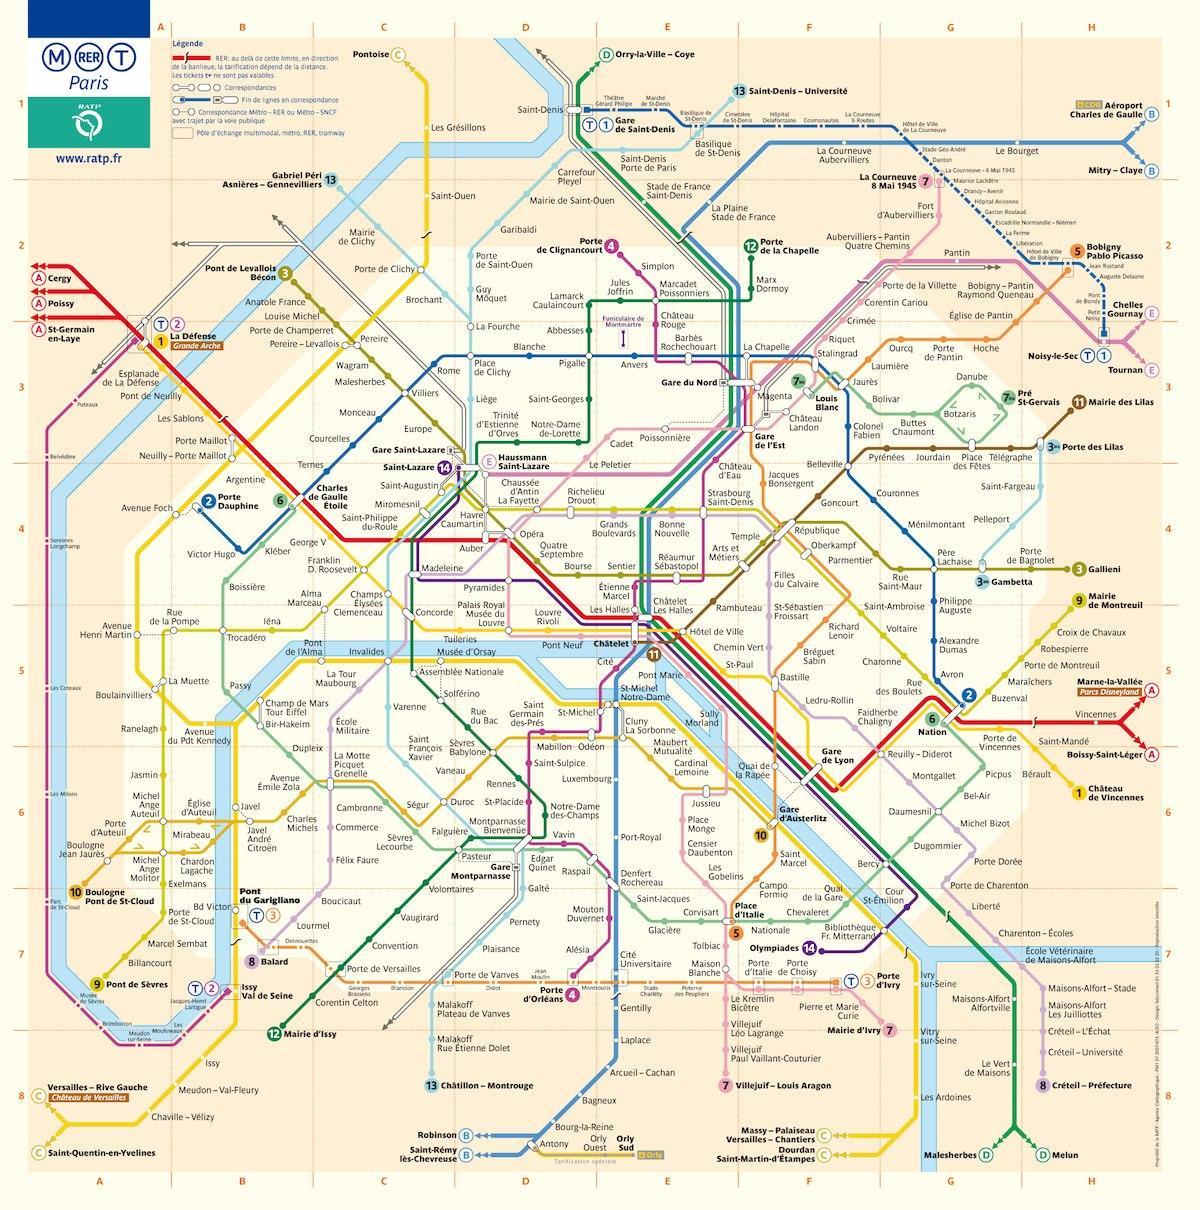 washington dc metro mapa dels carrers